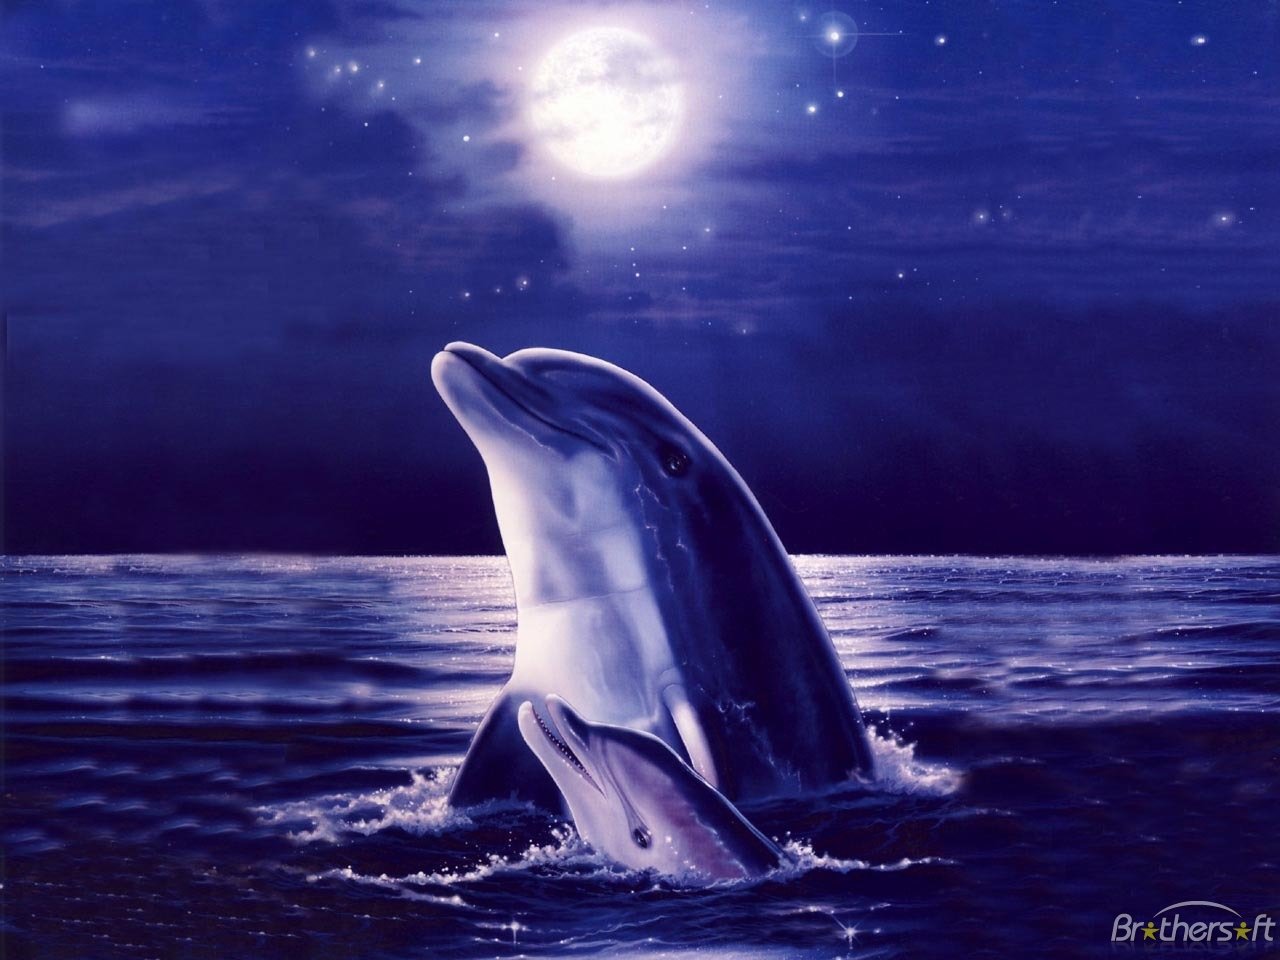 72+] Free Dolphin Wallpaper - WallpaperSafari